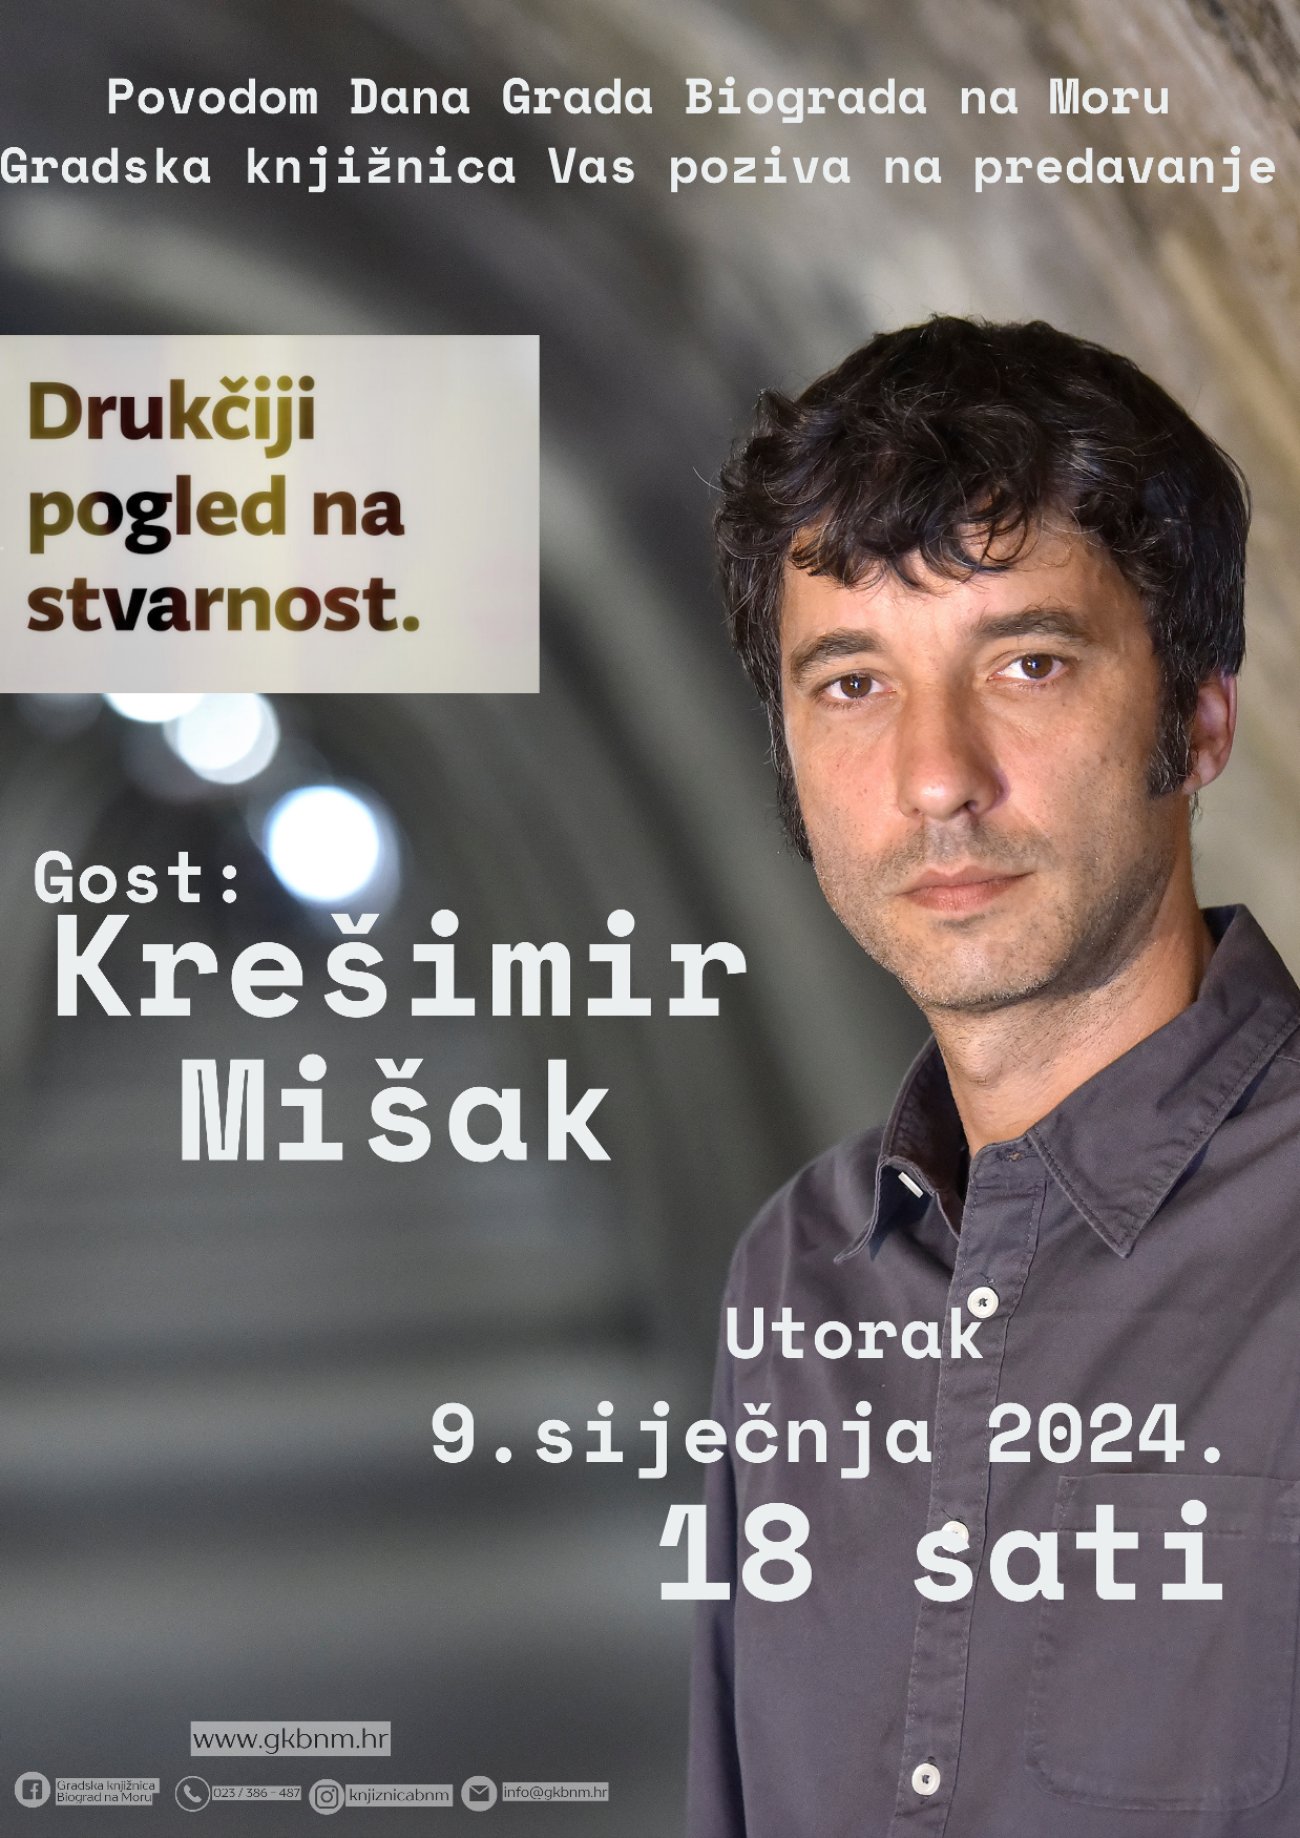 'Drukčiji pogled na stvarnost': Krešimir Mišak gostuje u Biogradu povodom Dana Grada